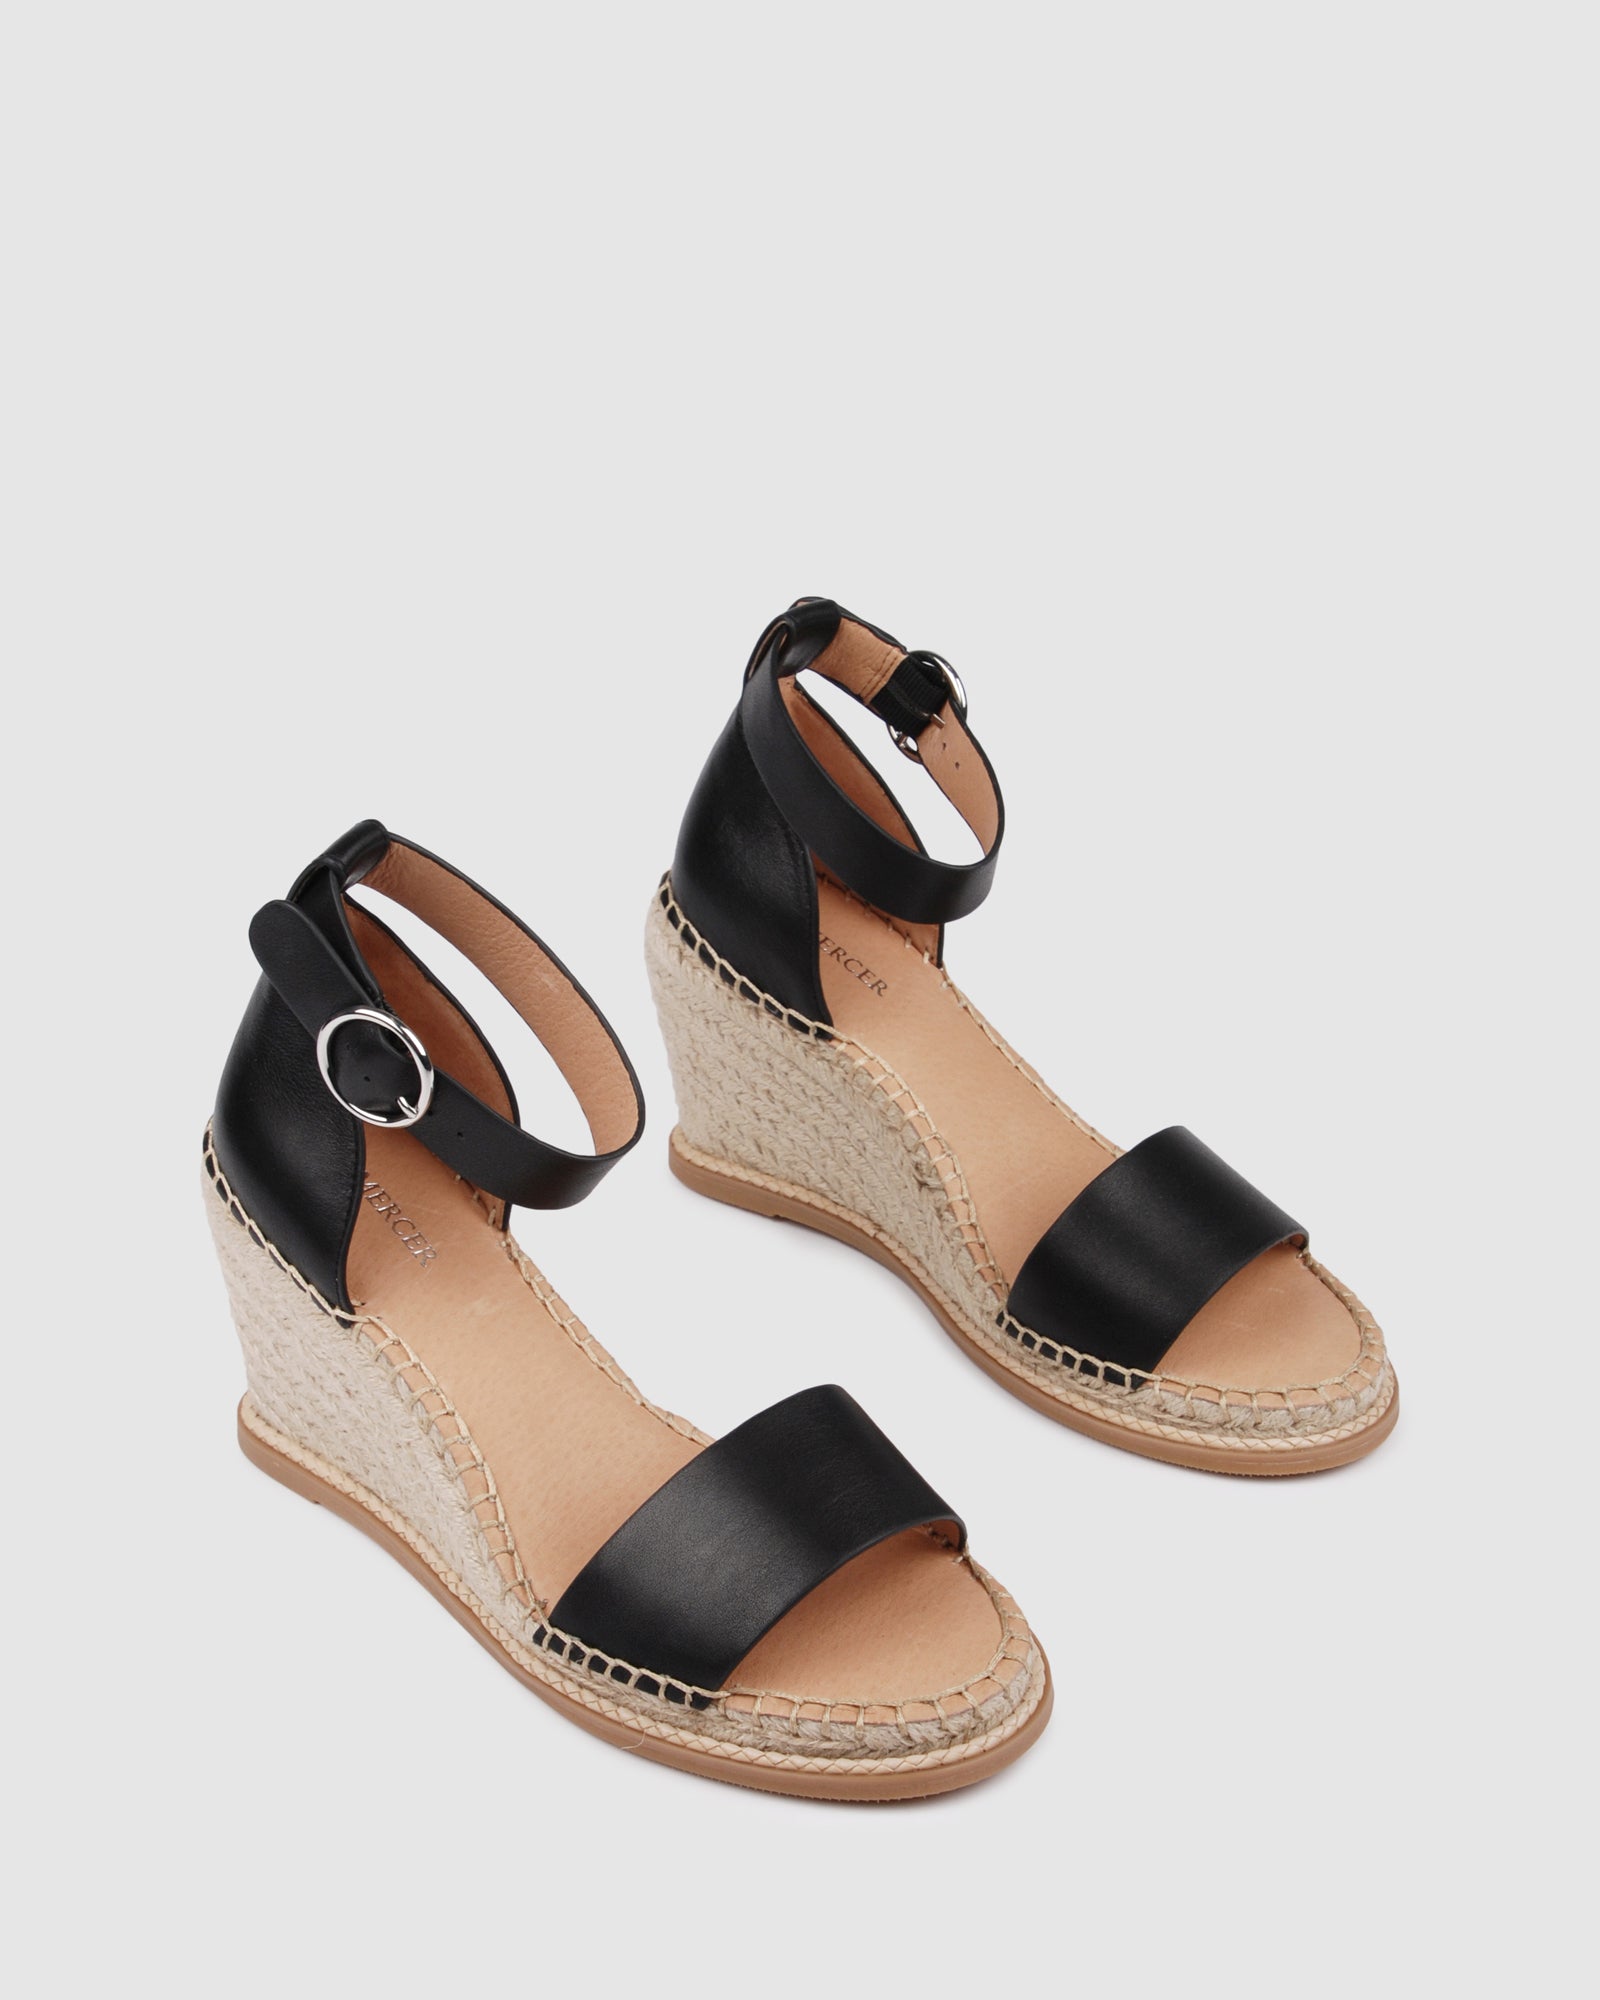 NEW Jo Mercer Margot High Heel Wedge Espadrilles Sandals | eBay